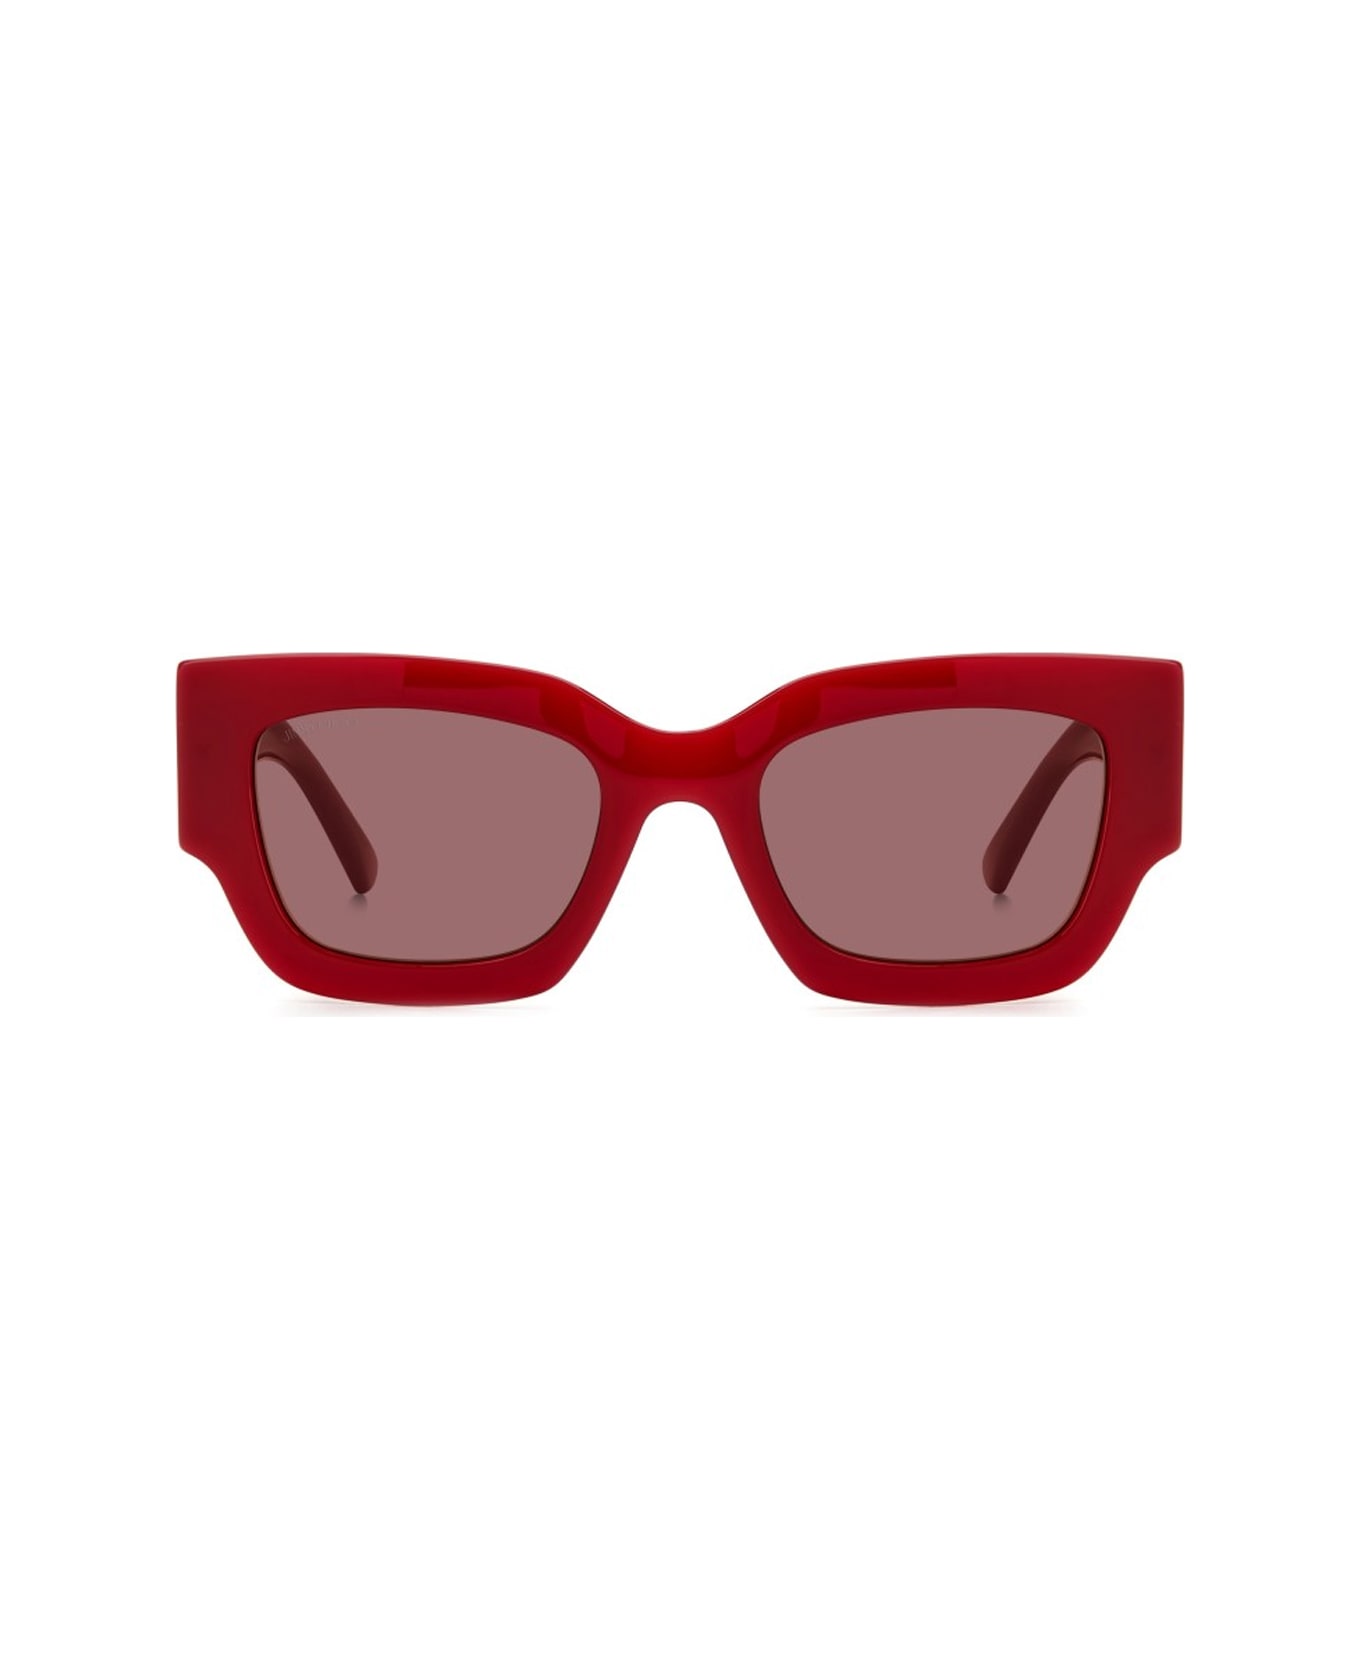 Jimmy Choo Eyewear Nena/s C9a/4s Sunglasses - Rosso サングラス